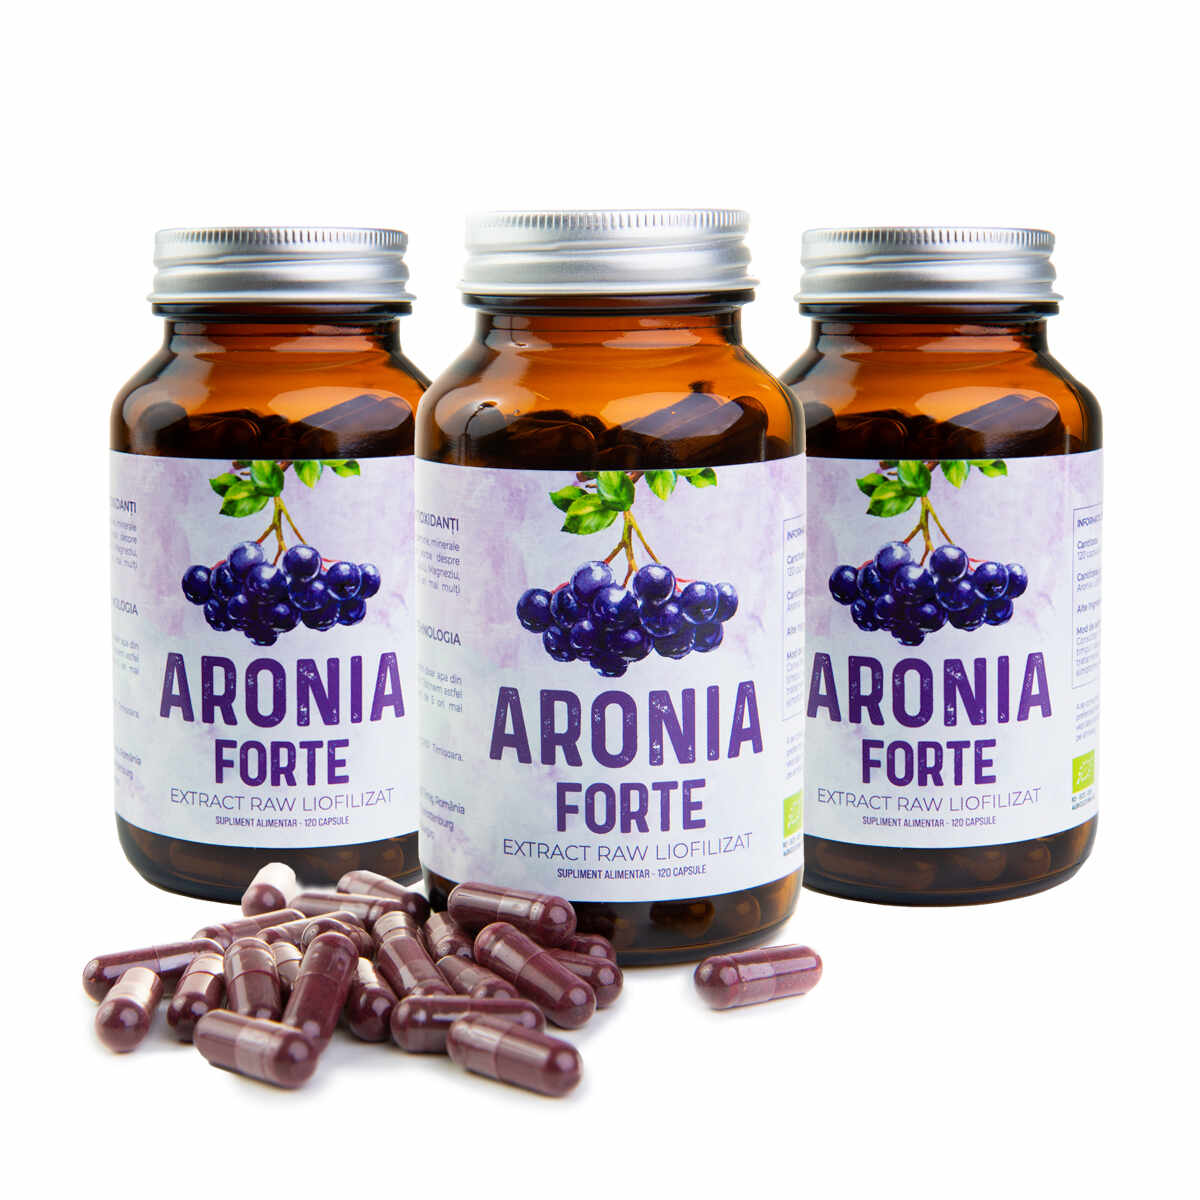 PROMO: 3 Flacoane Aronia Forte (-40 Lei Reducere)